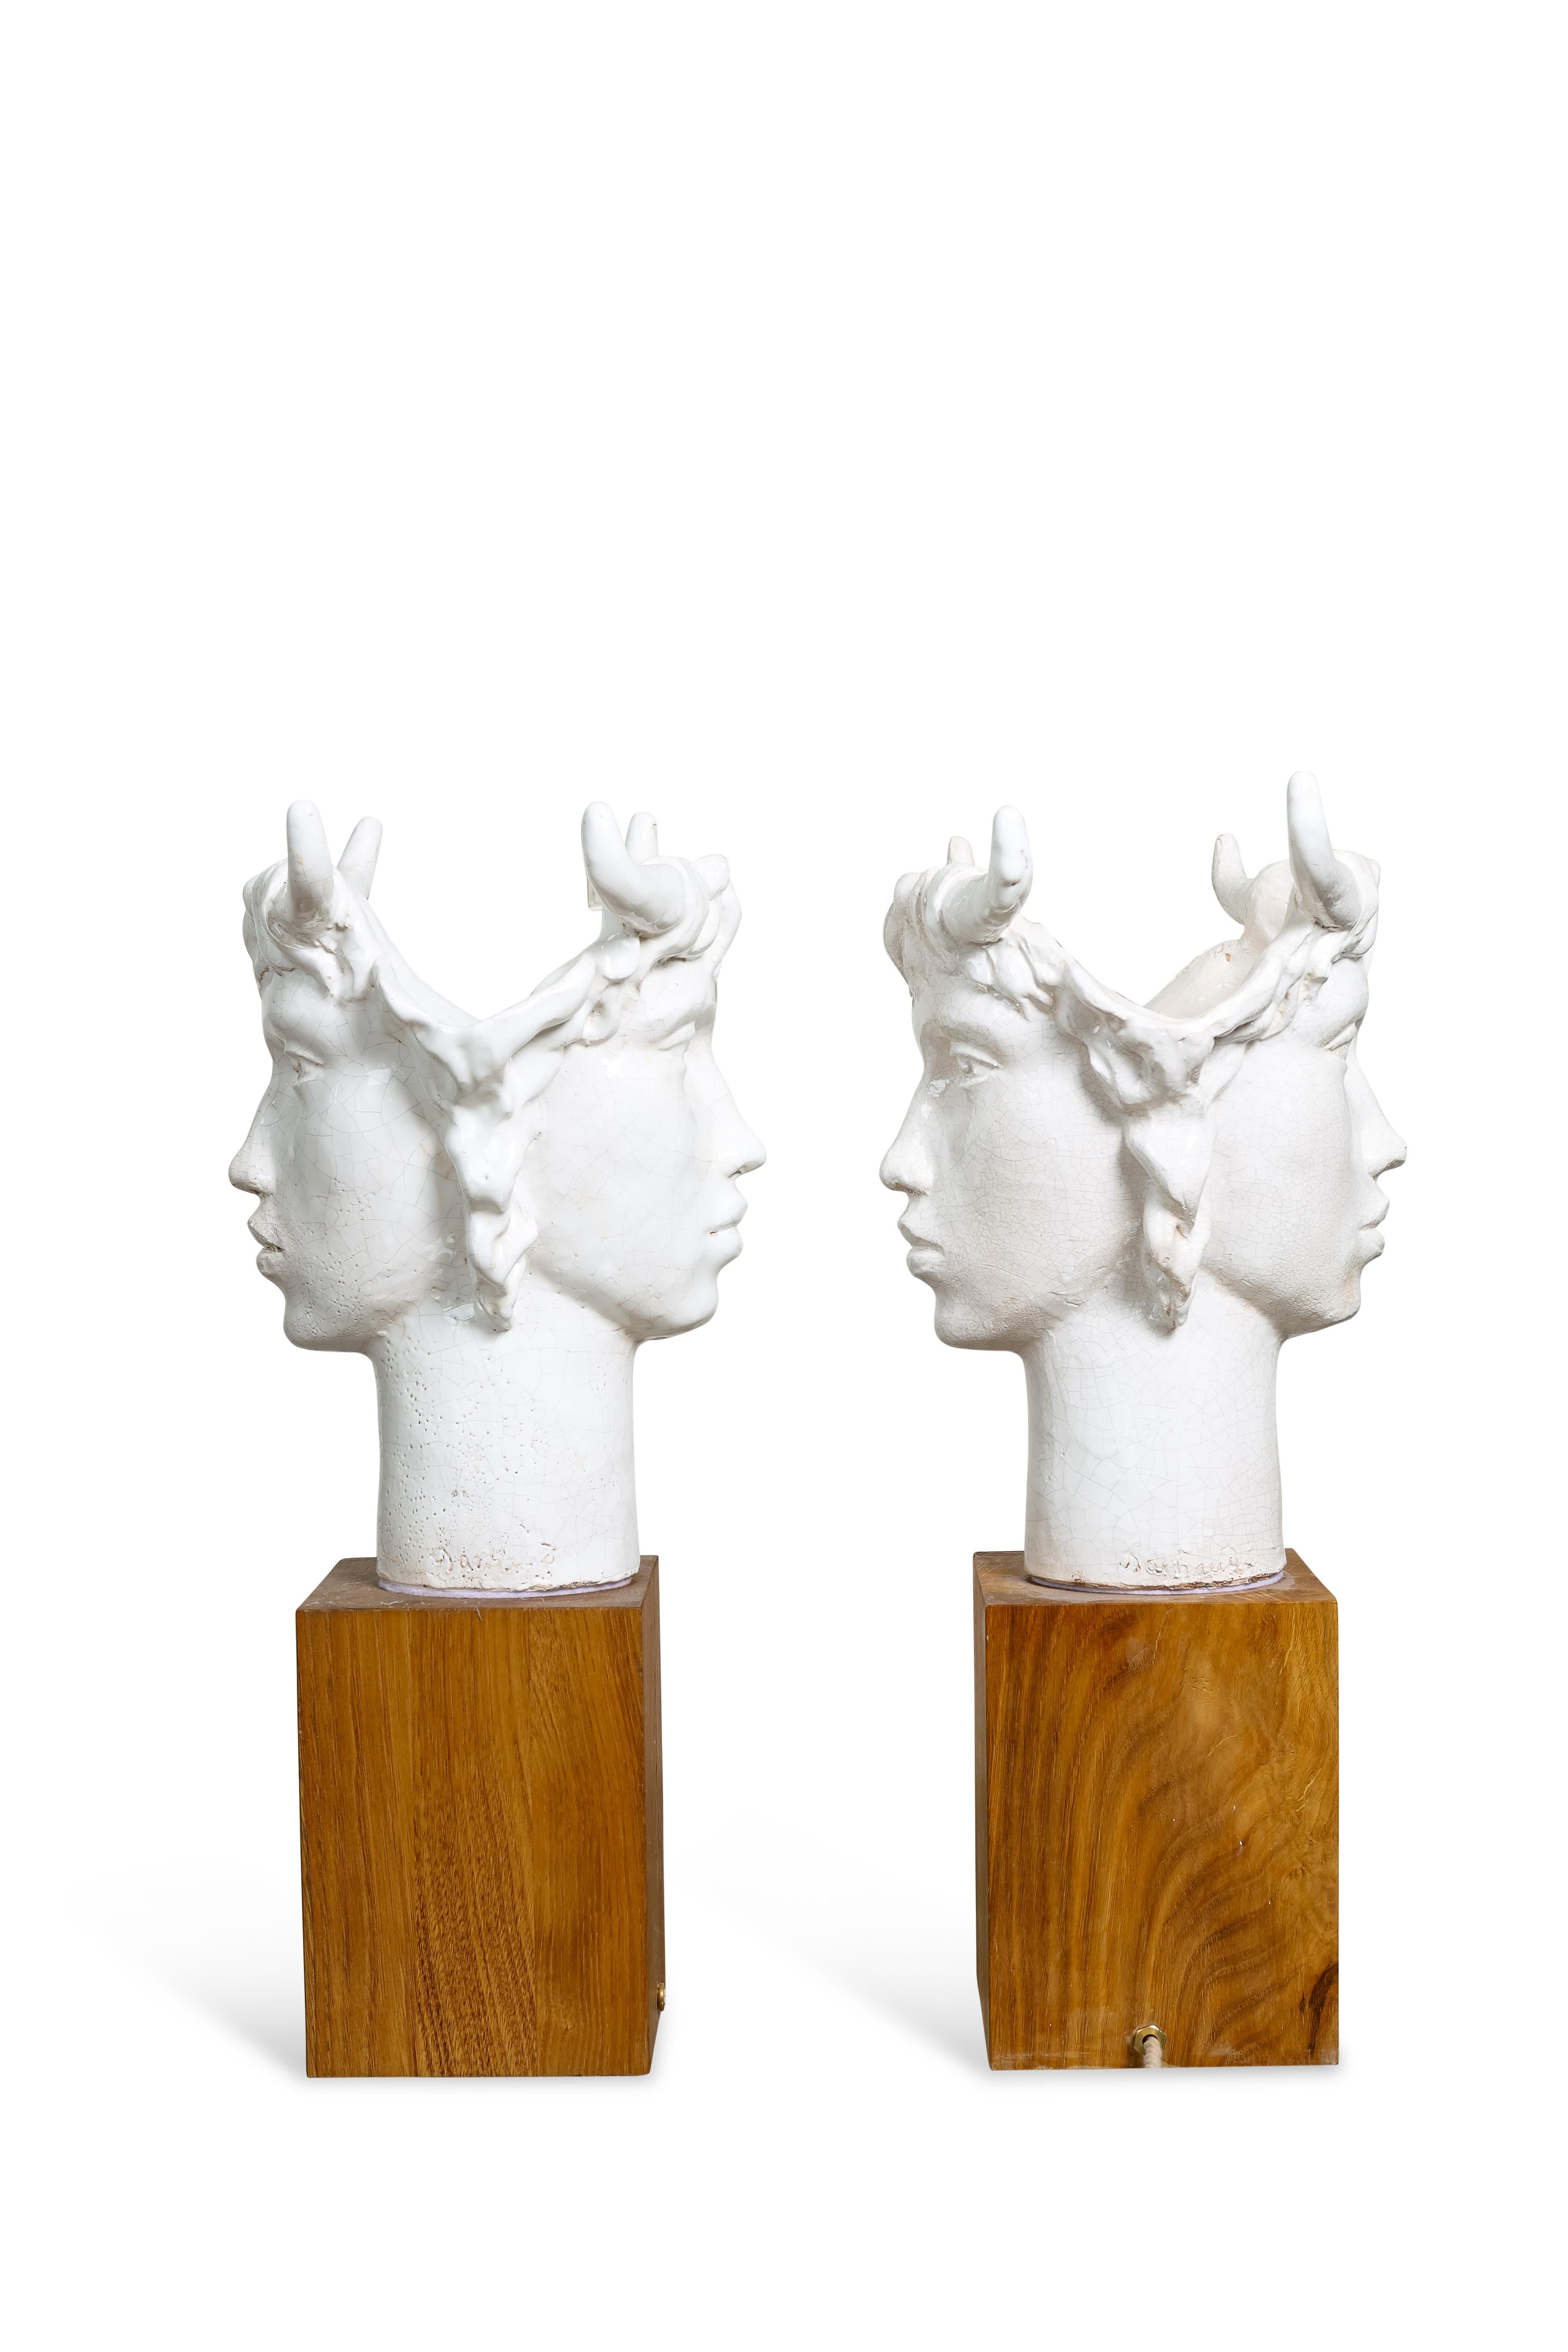 Contemporary Jacques Darbaud Spectacular Pair of Janus Ceramic Lamps For Sale